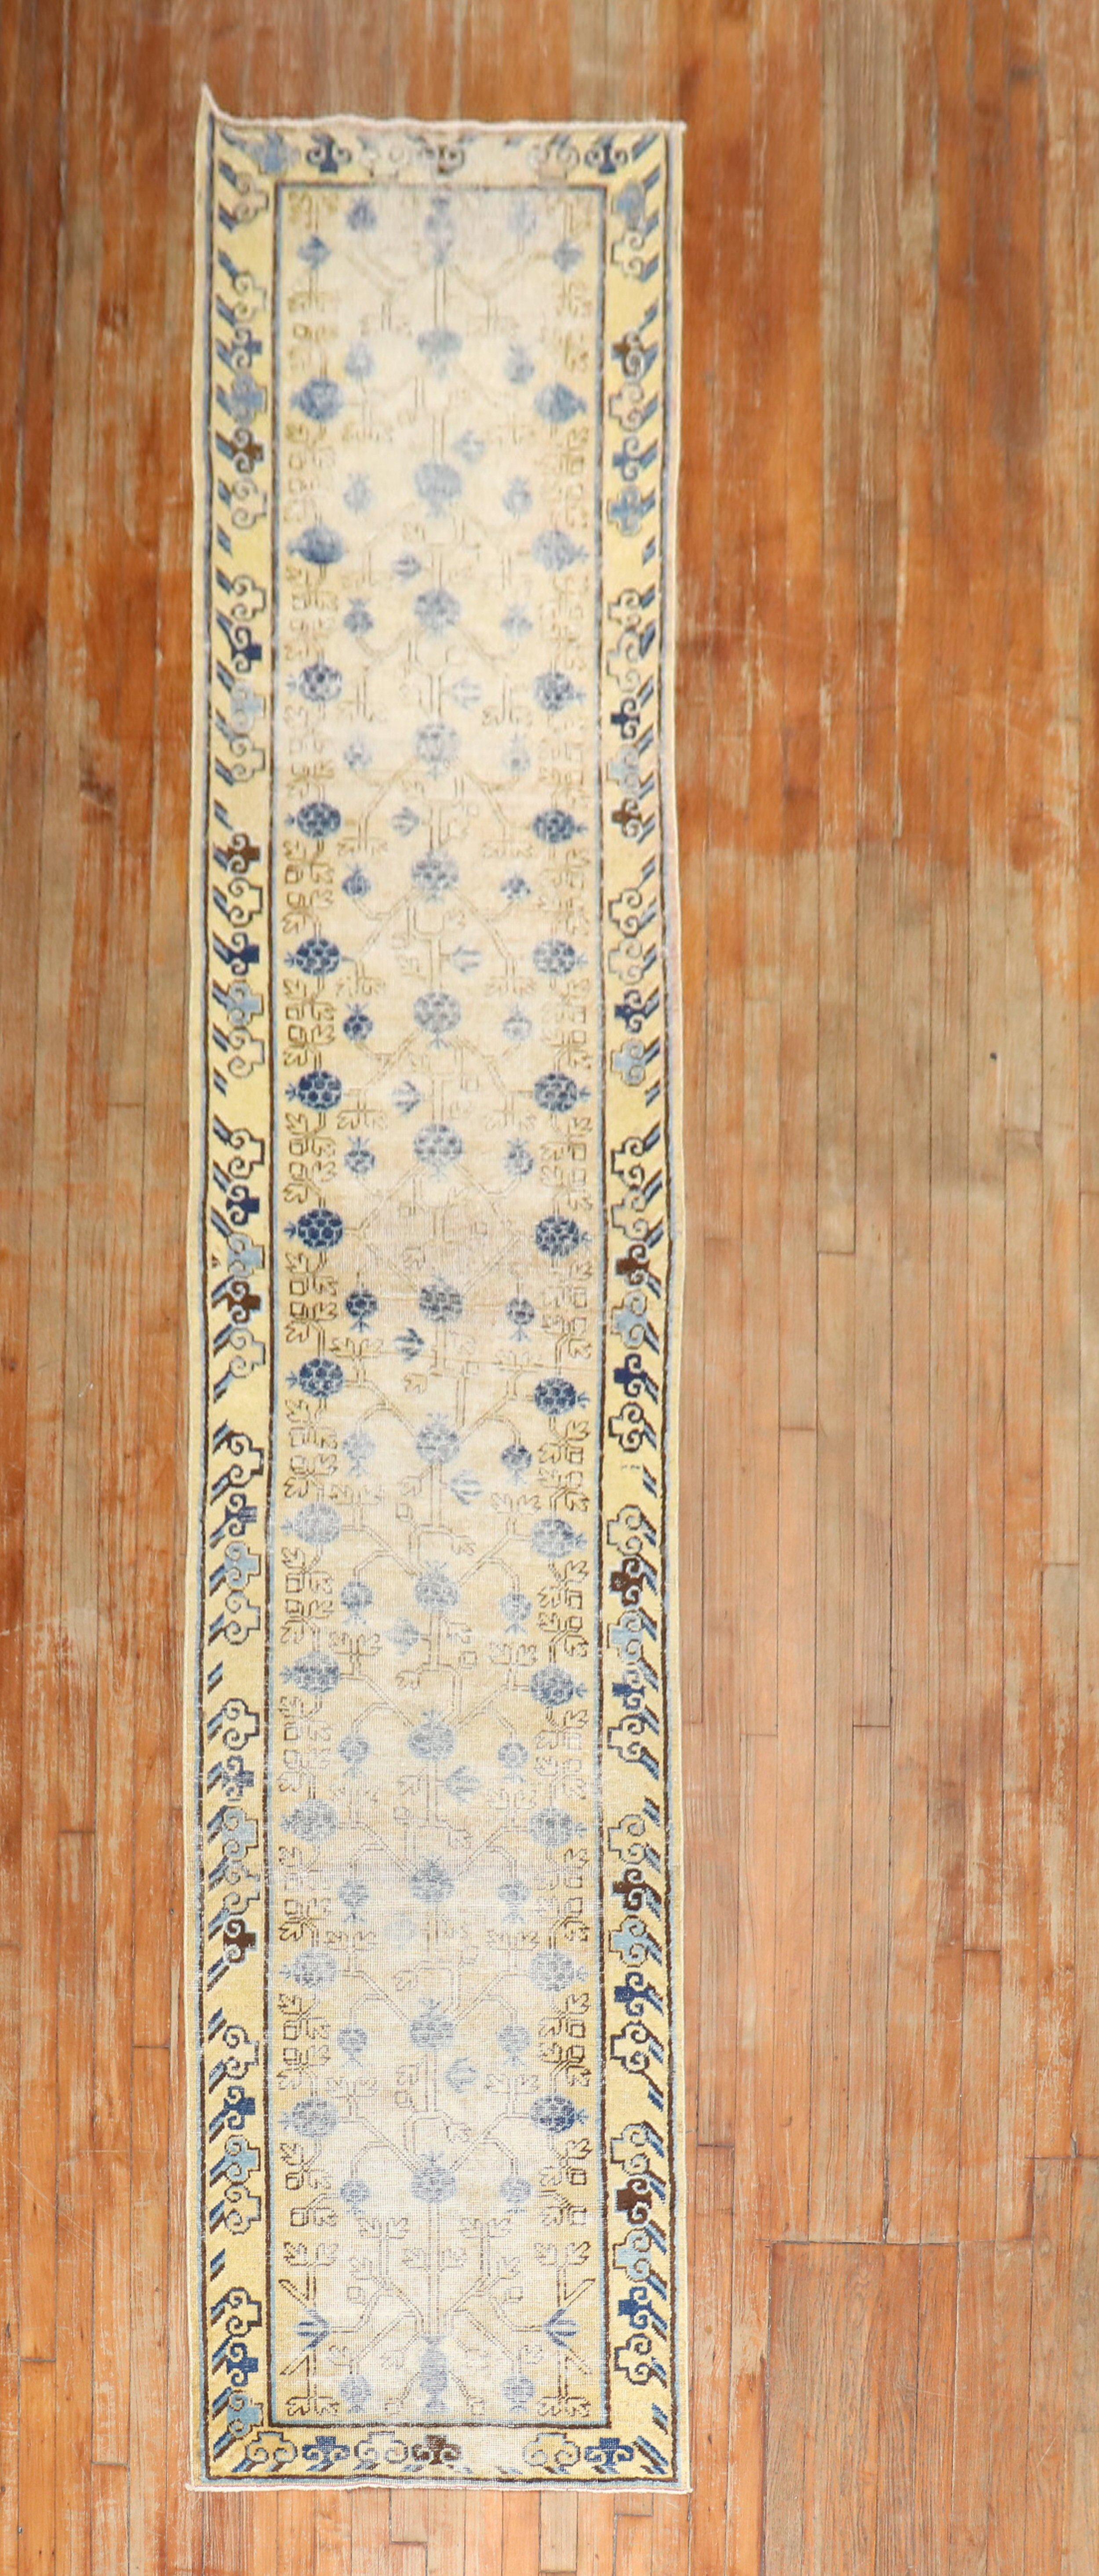 Late 19th century worn East Turkestan Khotan Runner with a pomegranate design in gray, mustard, beige and denim blue

Measures: 2'6'' x 14'.